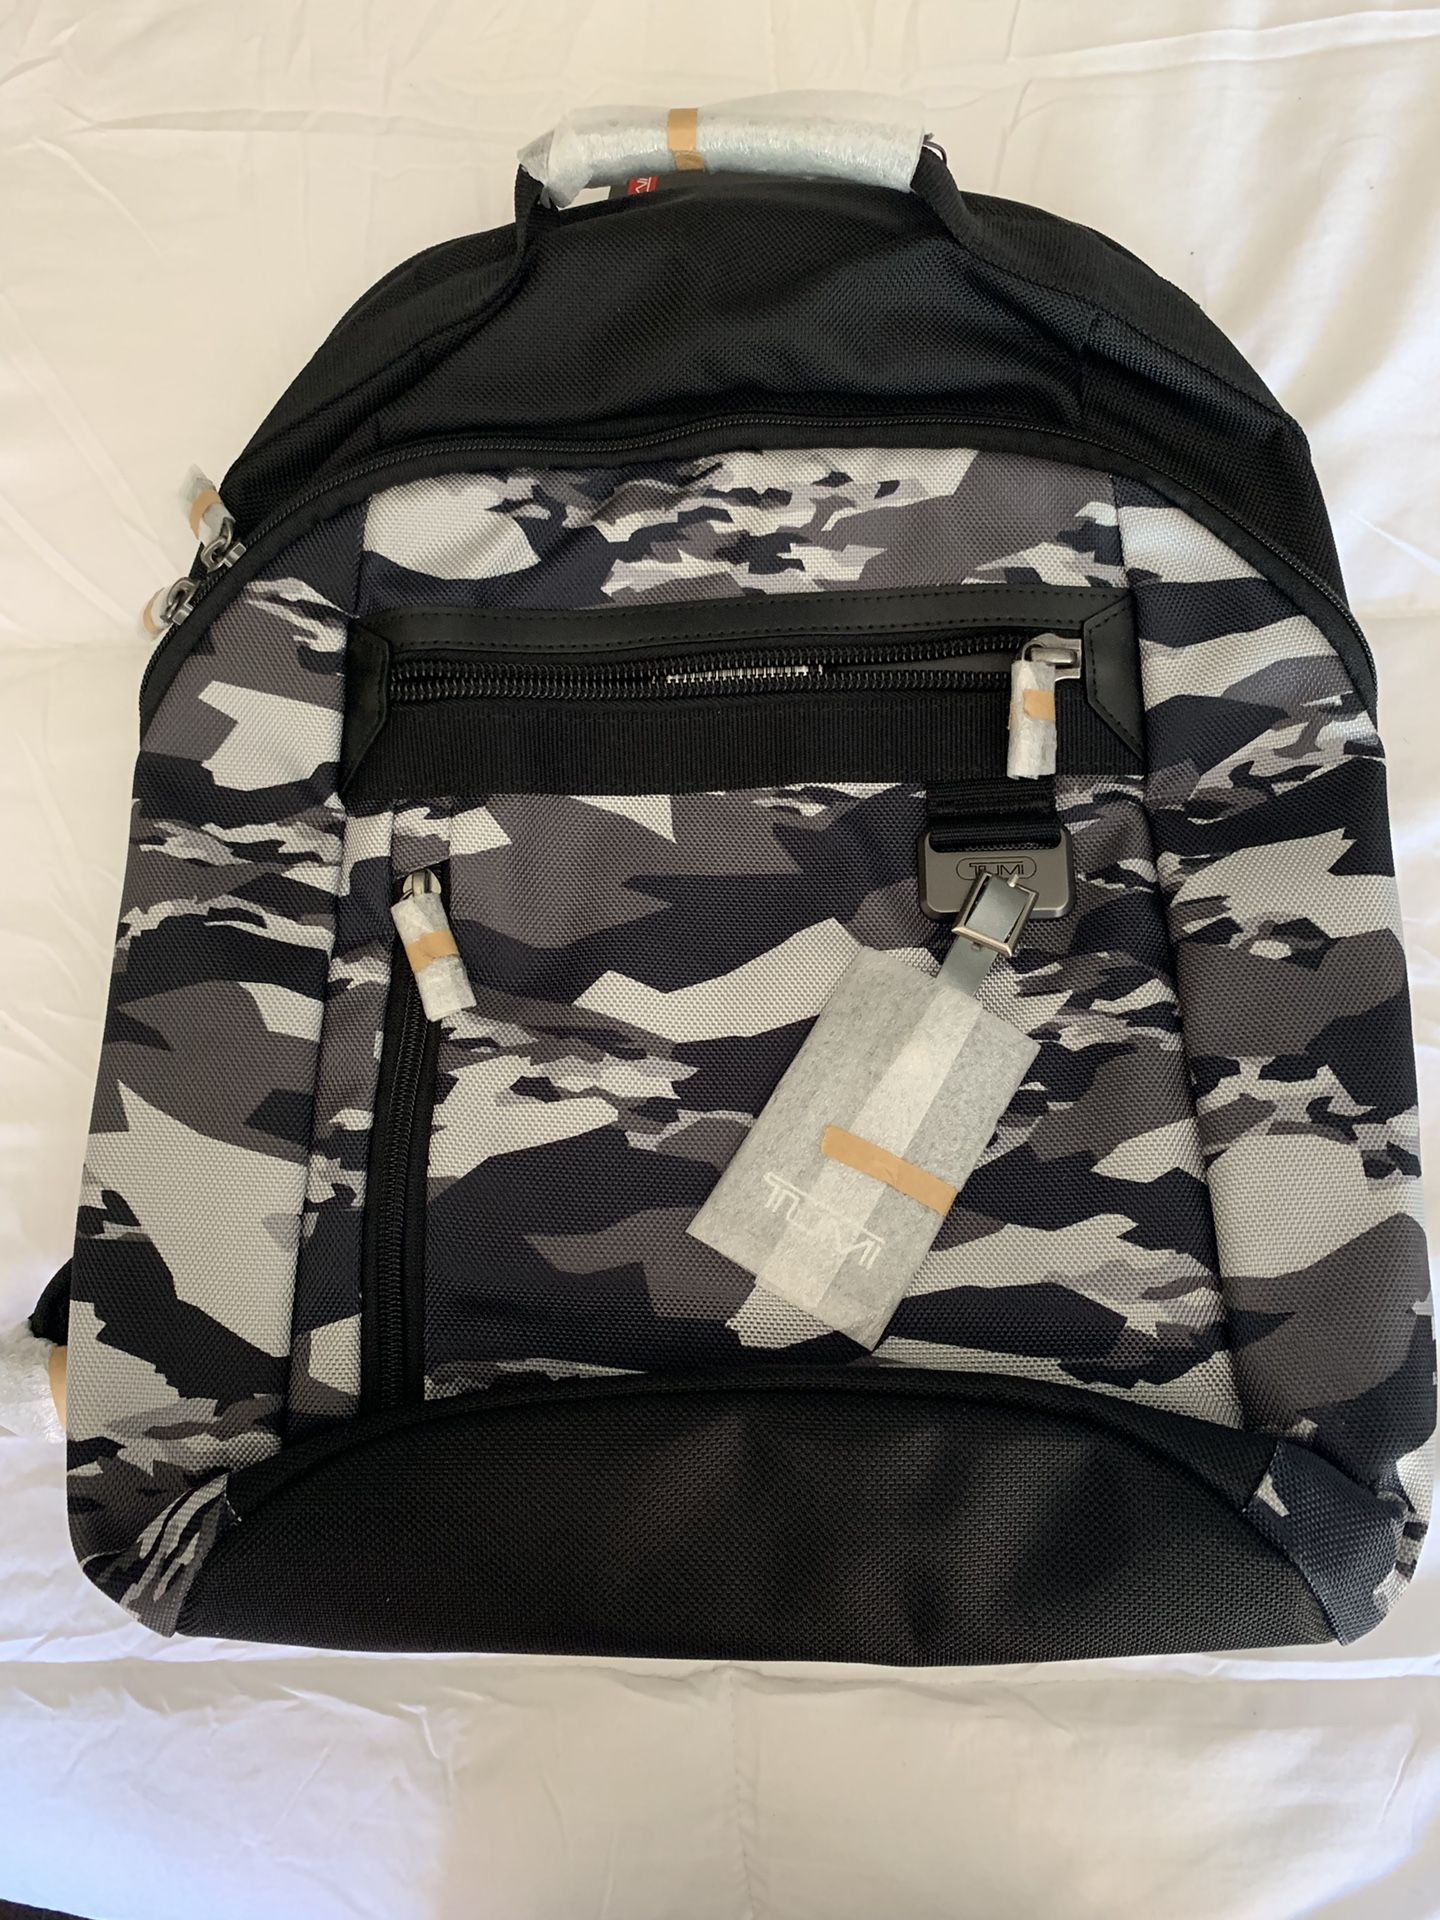 Brand new Tumi backpack